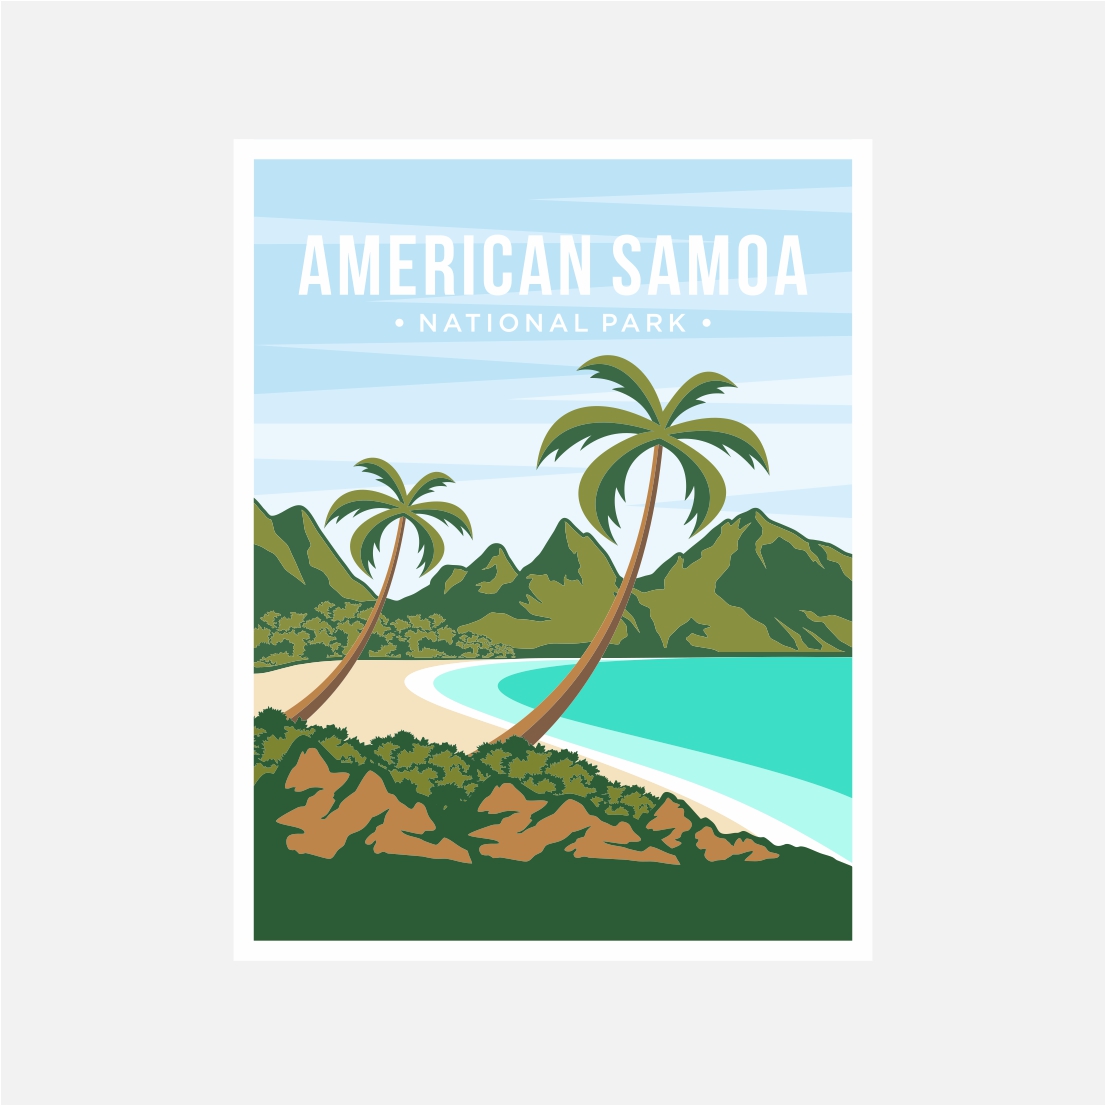 American Samoa National Park poster vector illustration design - $8 cover image.